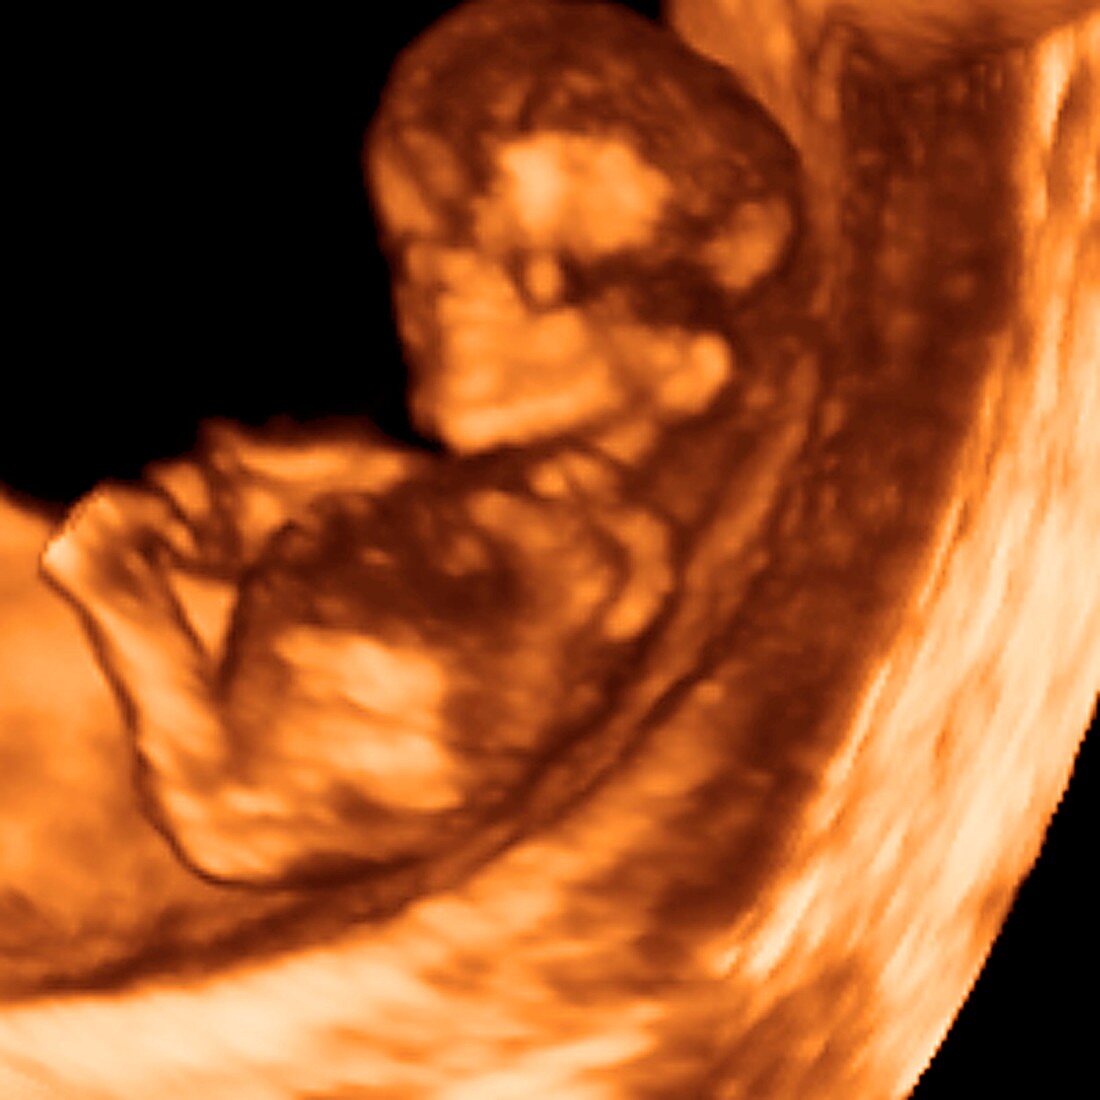 Foetus at 11 weeks,3D ultrasound